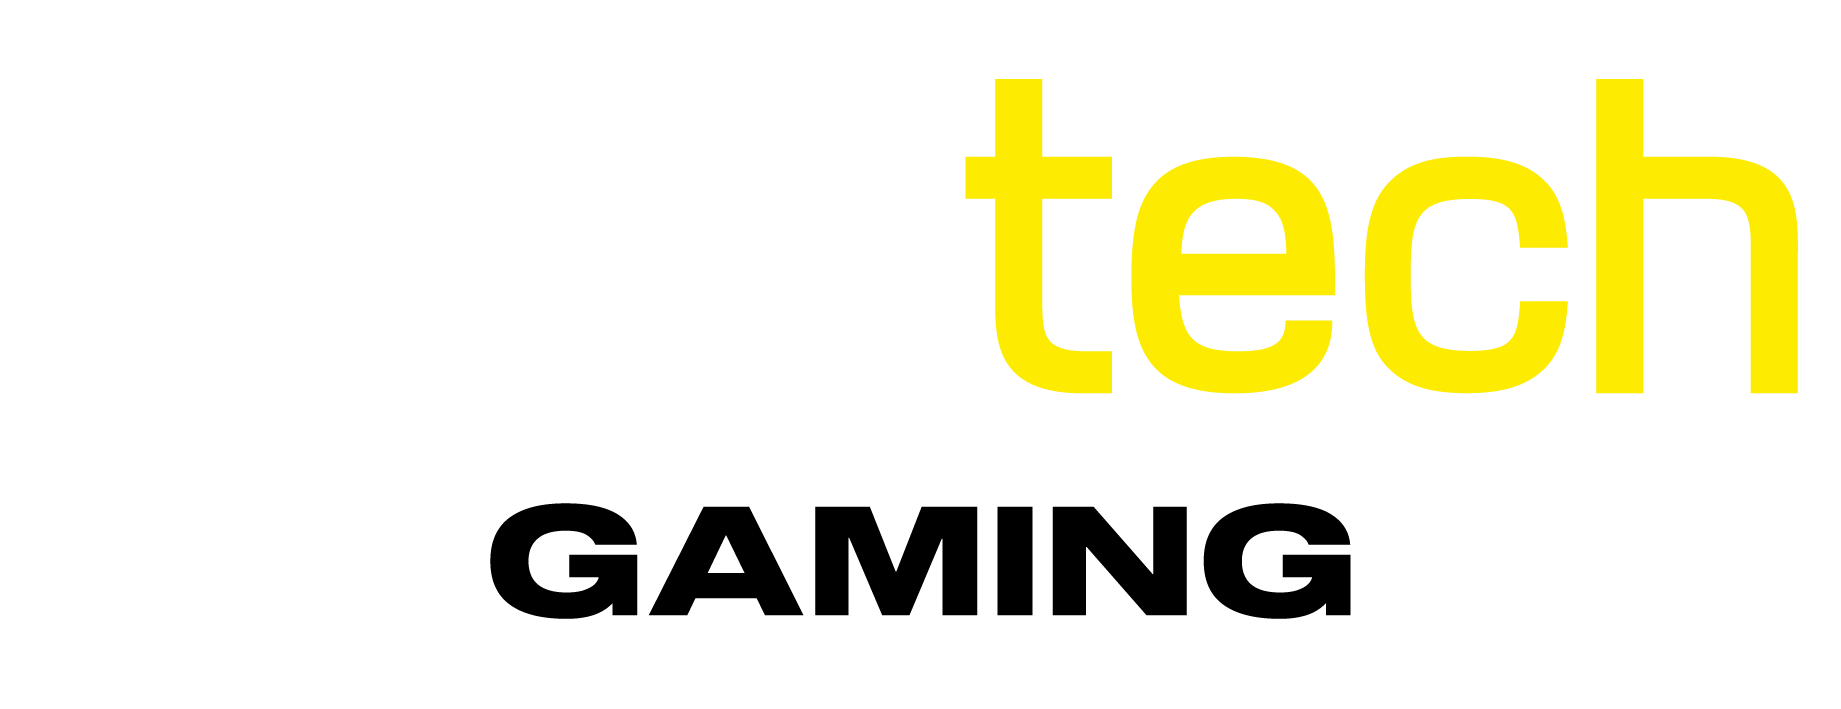 Racetech Gaming USA